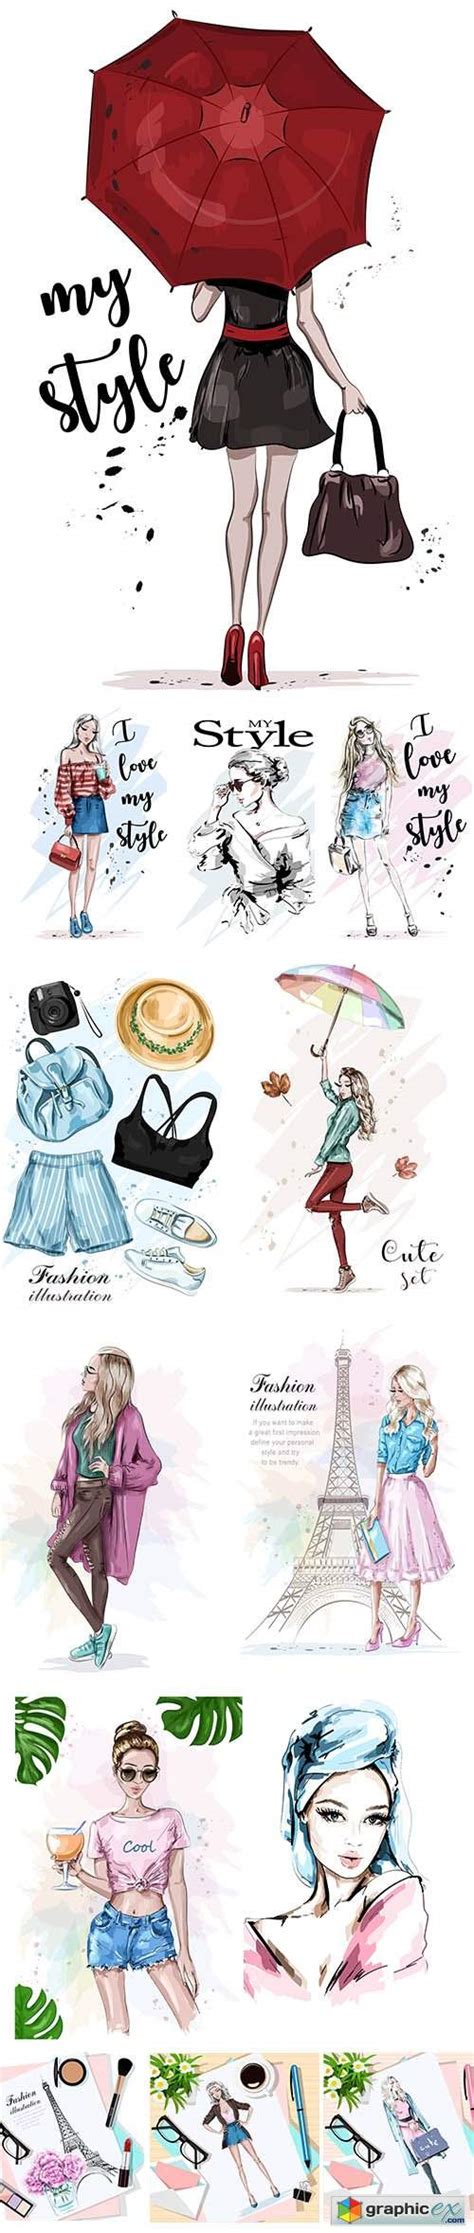 stylish beautiful girl illustrations   vector stock image